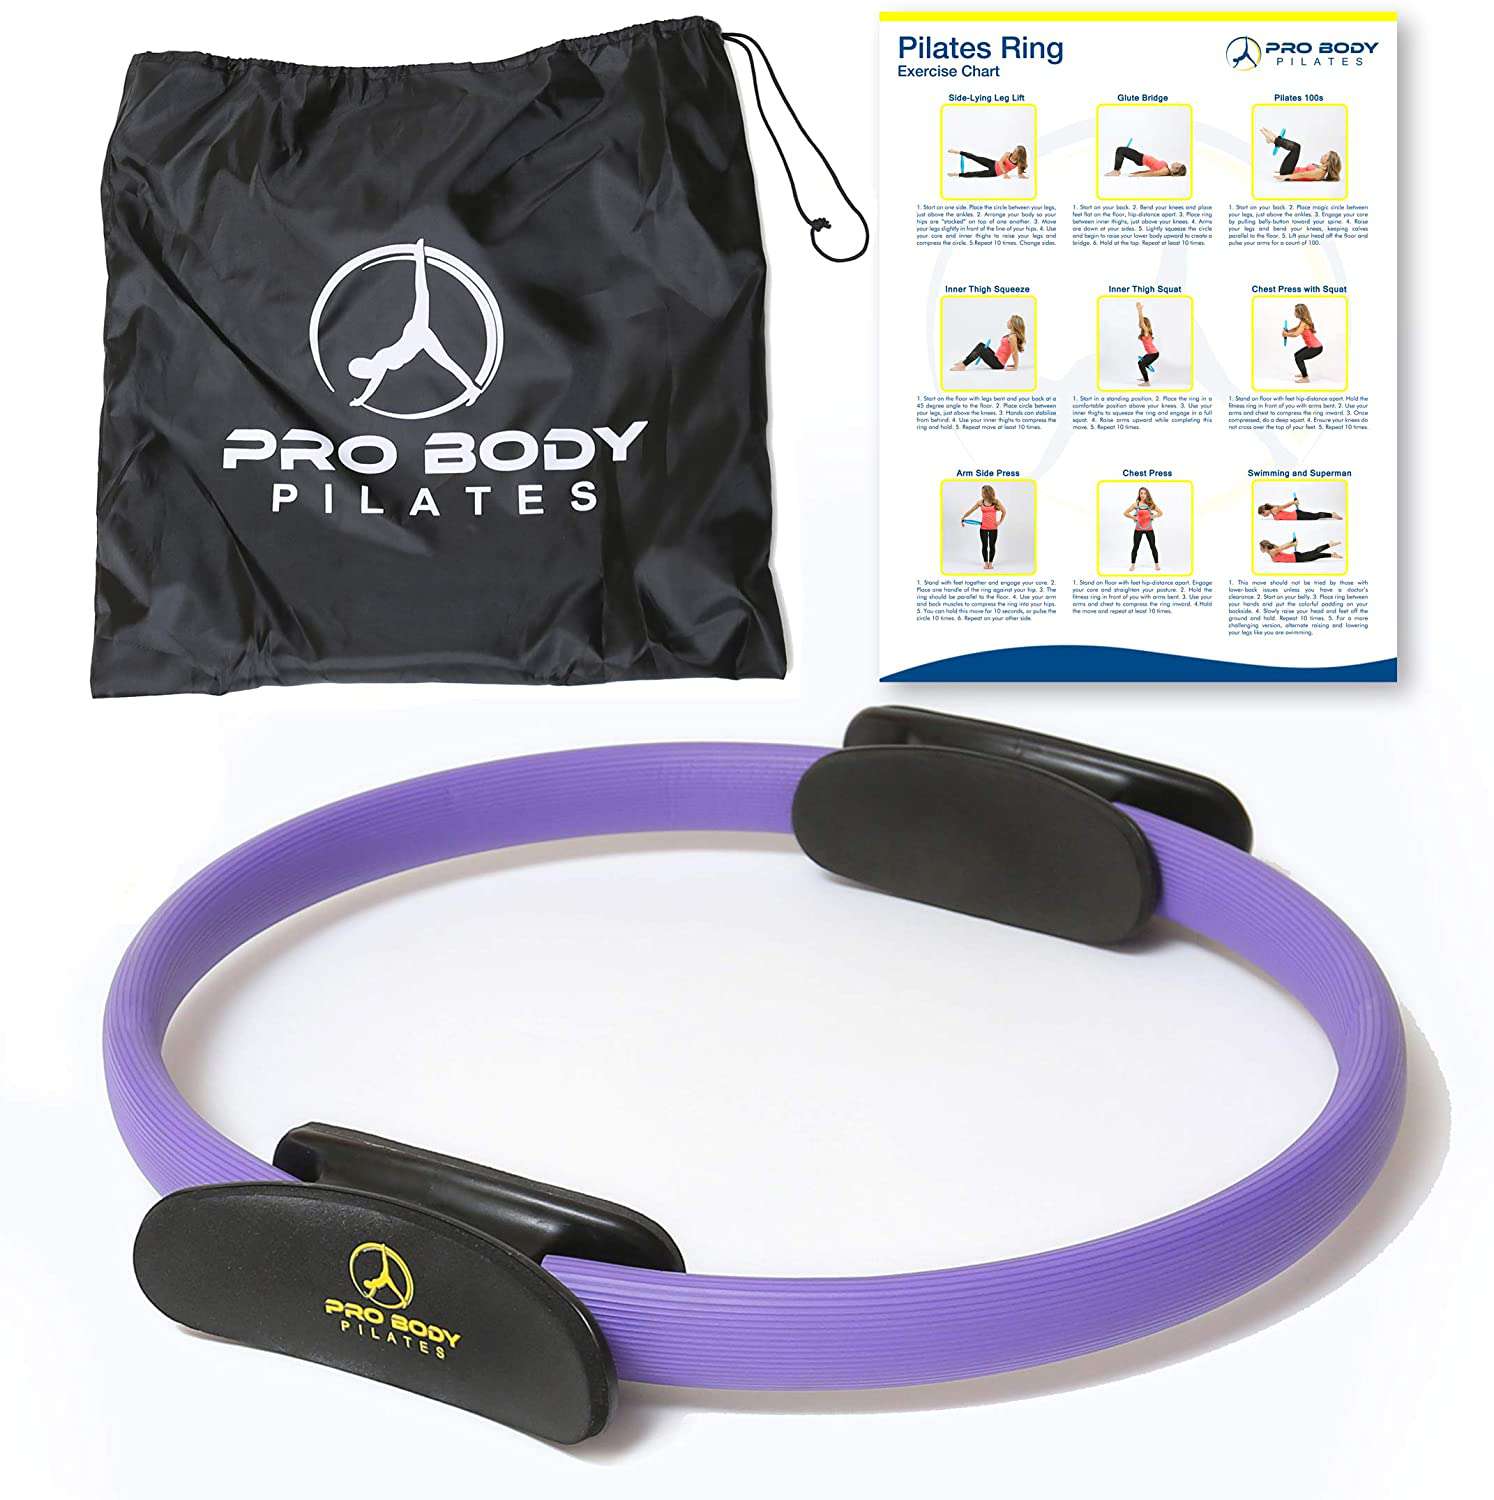 Probody Pilates Ring